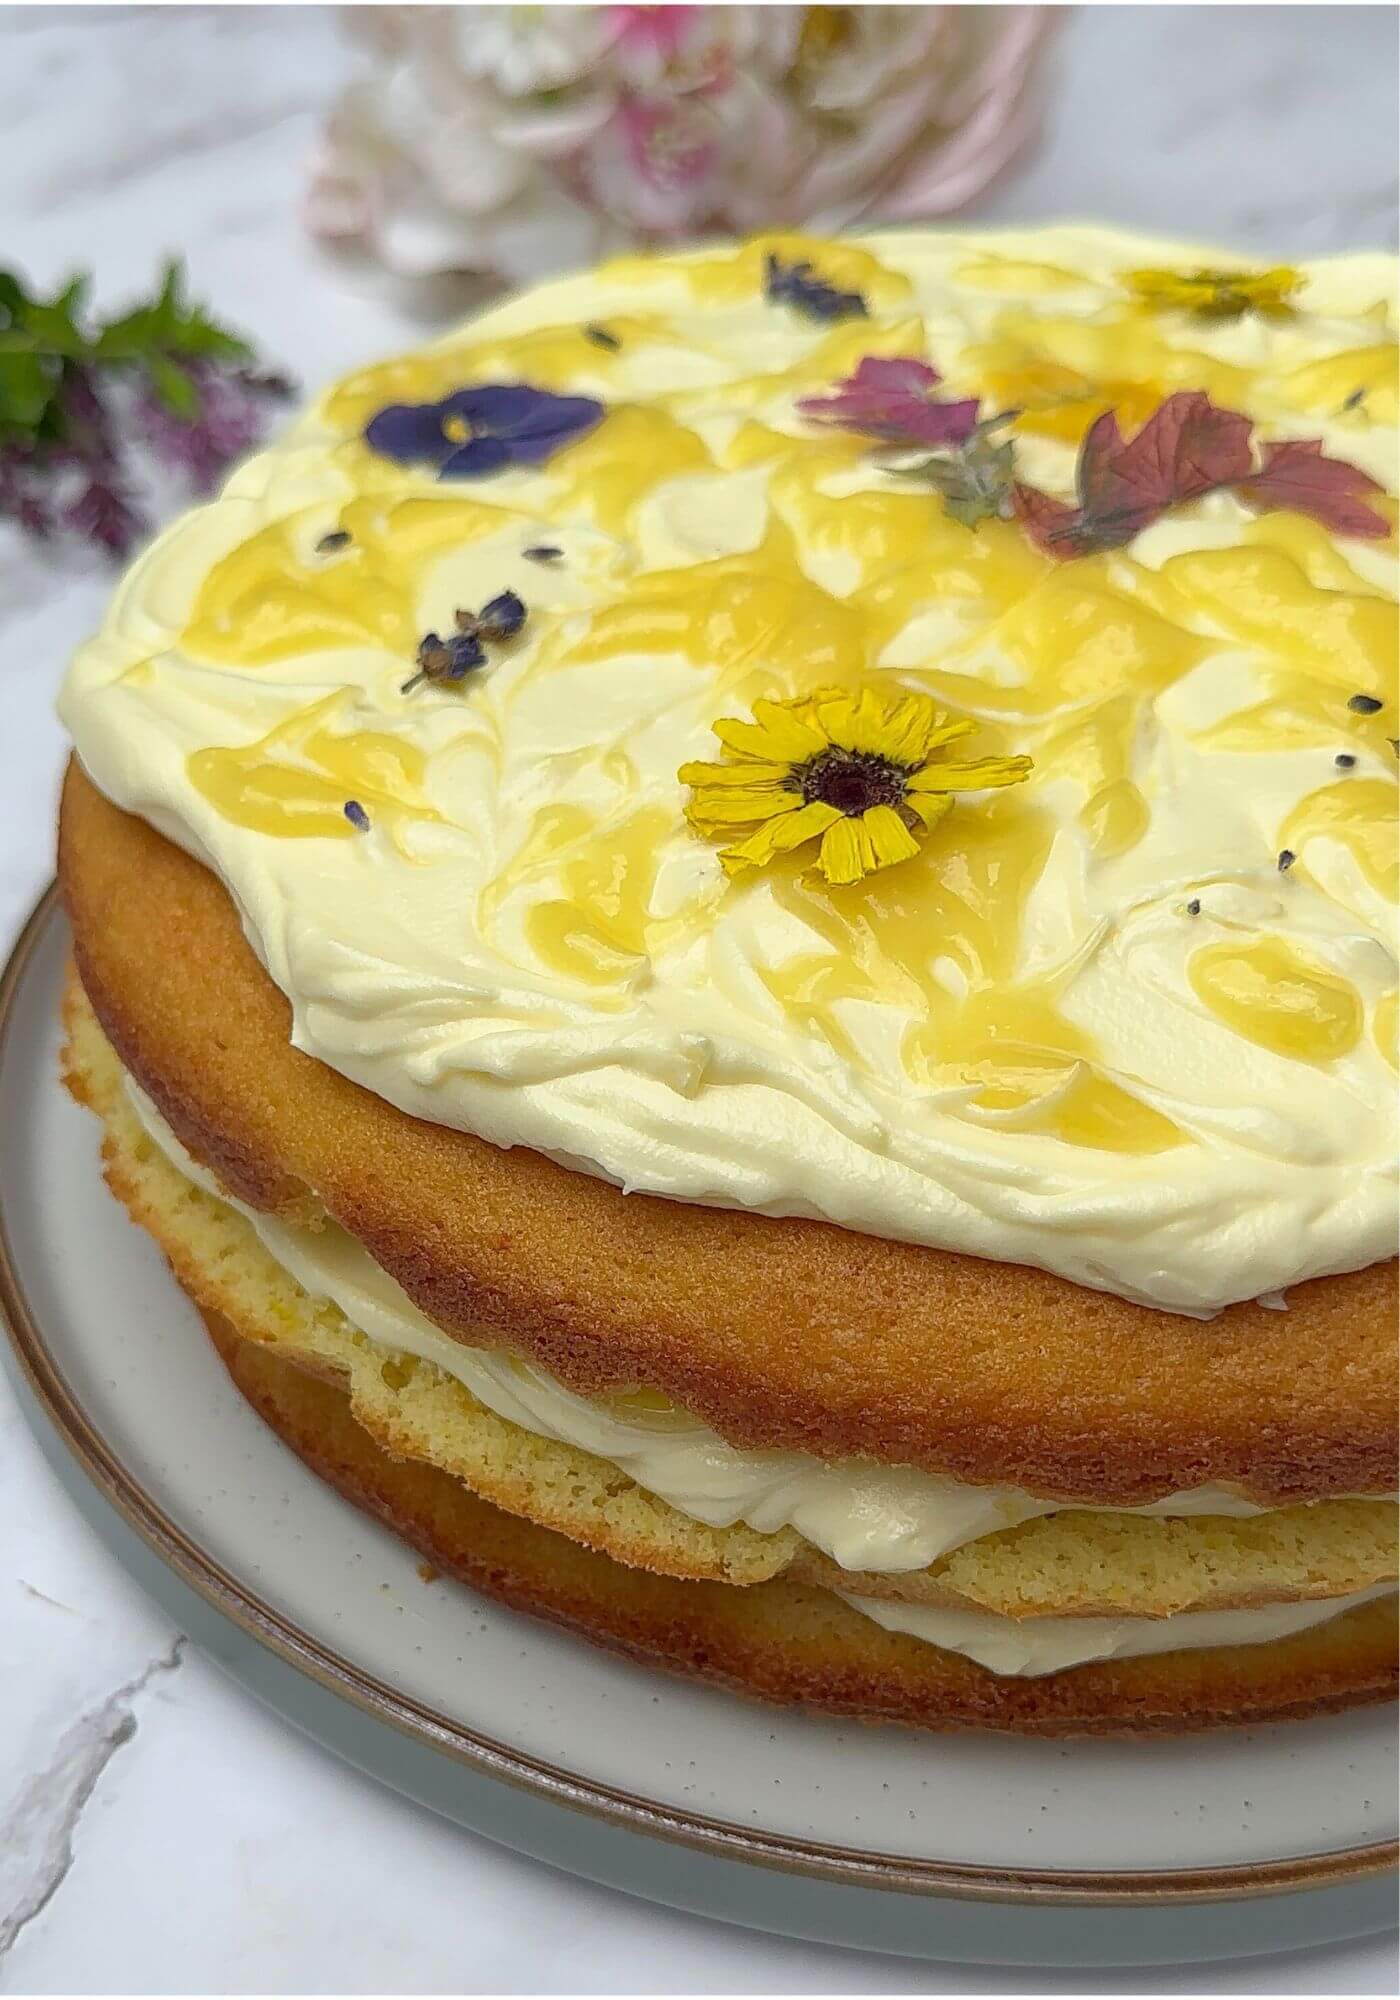 Lemon cake with lemon cream cheese frosting, lemon curd, and edible flowers.